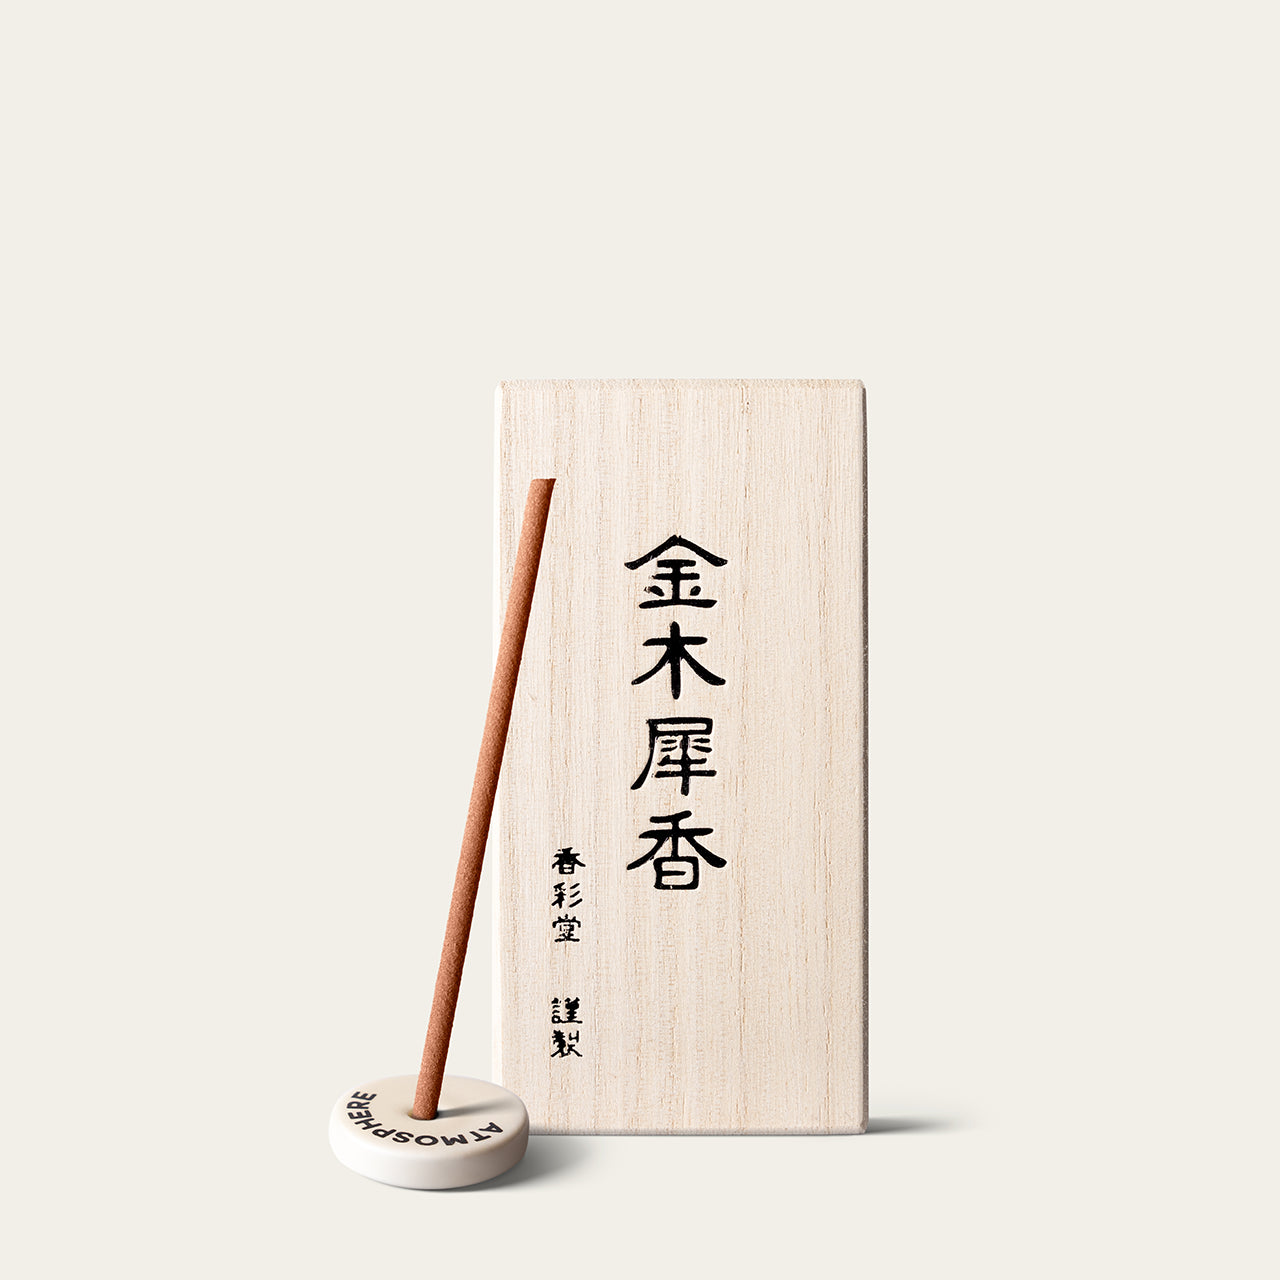 Kousaido Ancient City Osmanthus Kinmokuseika Japanese incense sticks (30 sticks) with Atmosphere ceramic incense holder